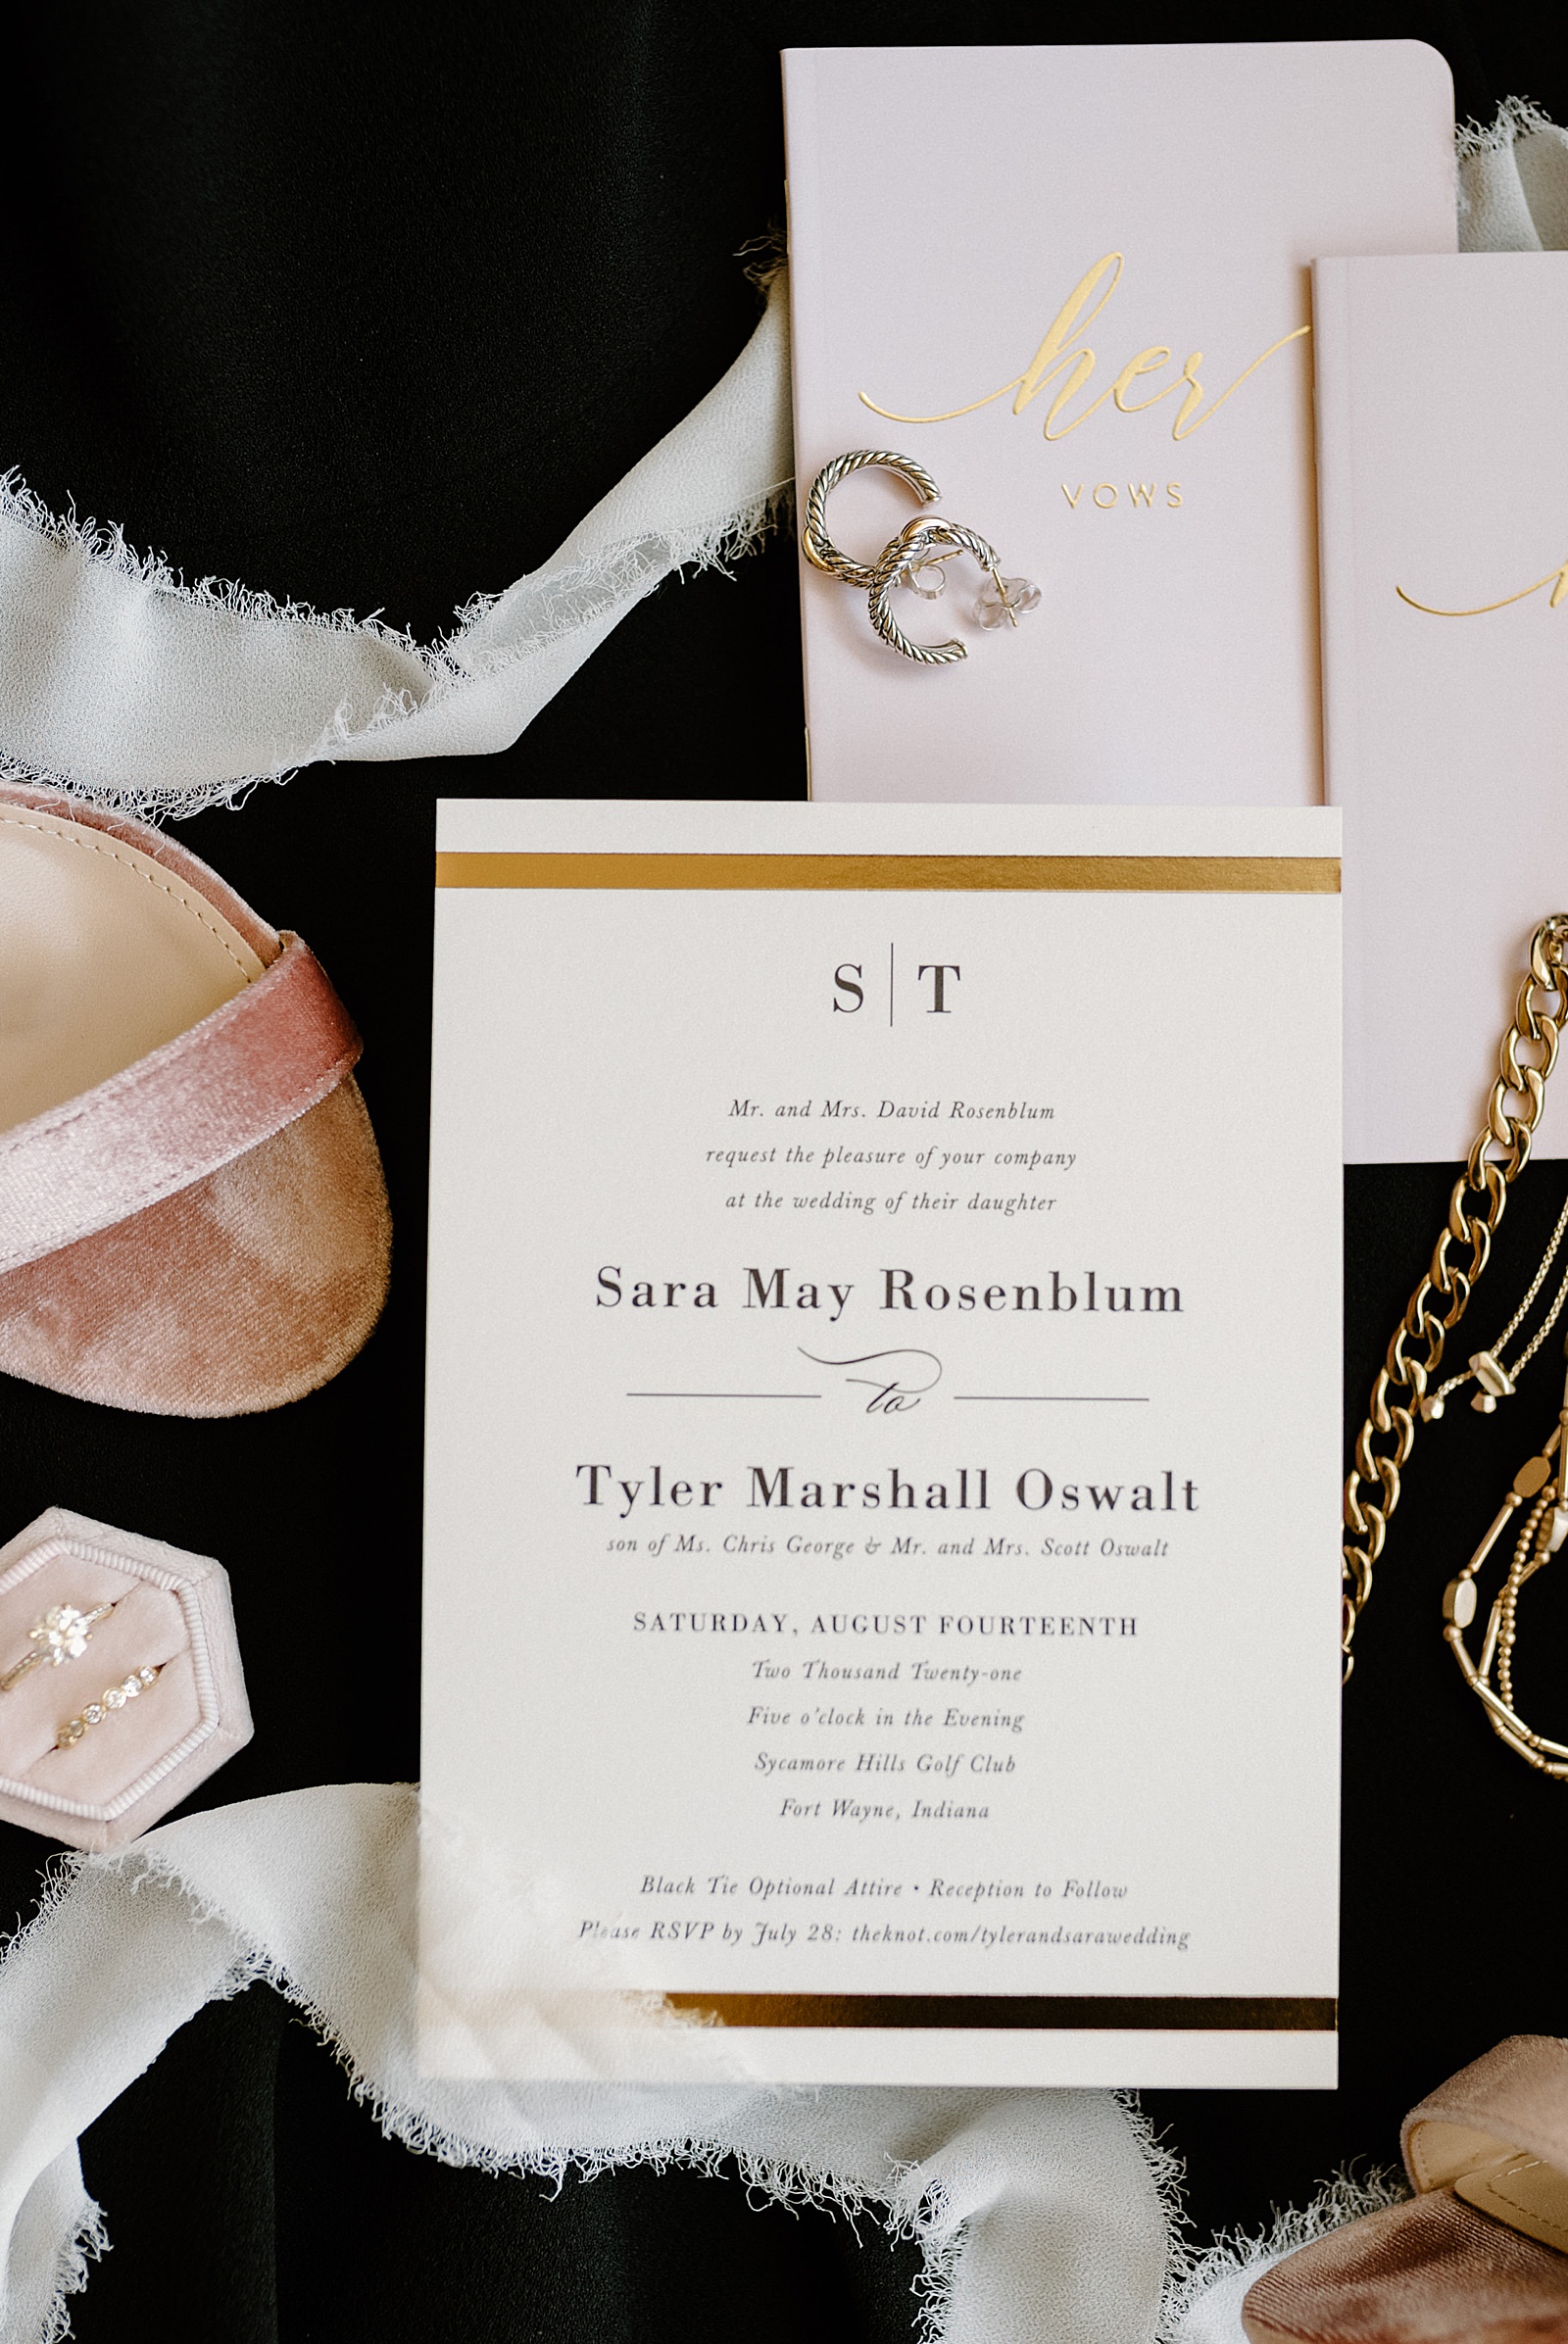 A wedding invitation for Sara & Tyler who had a Sycamore Hills Summer Wedding.